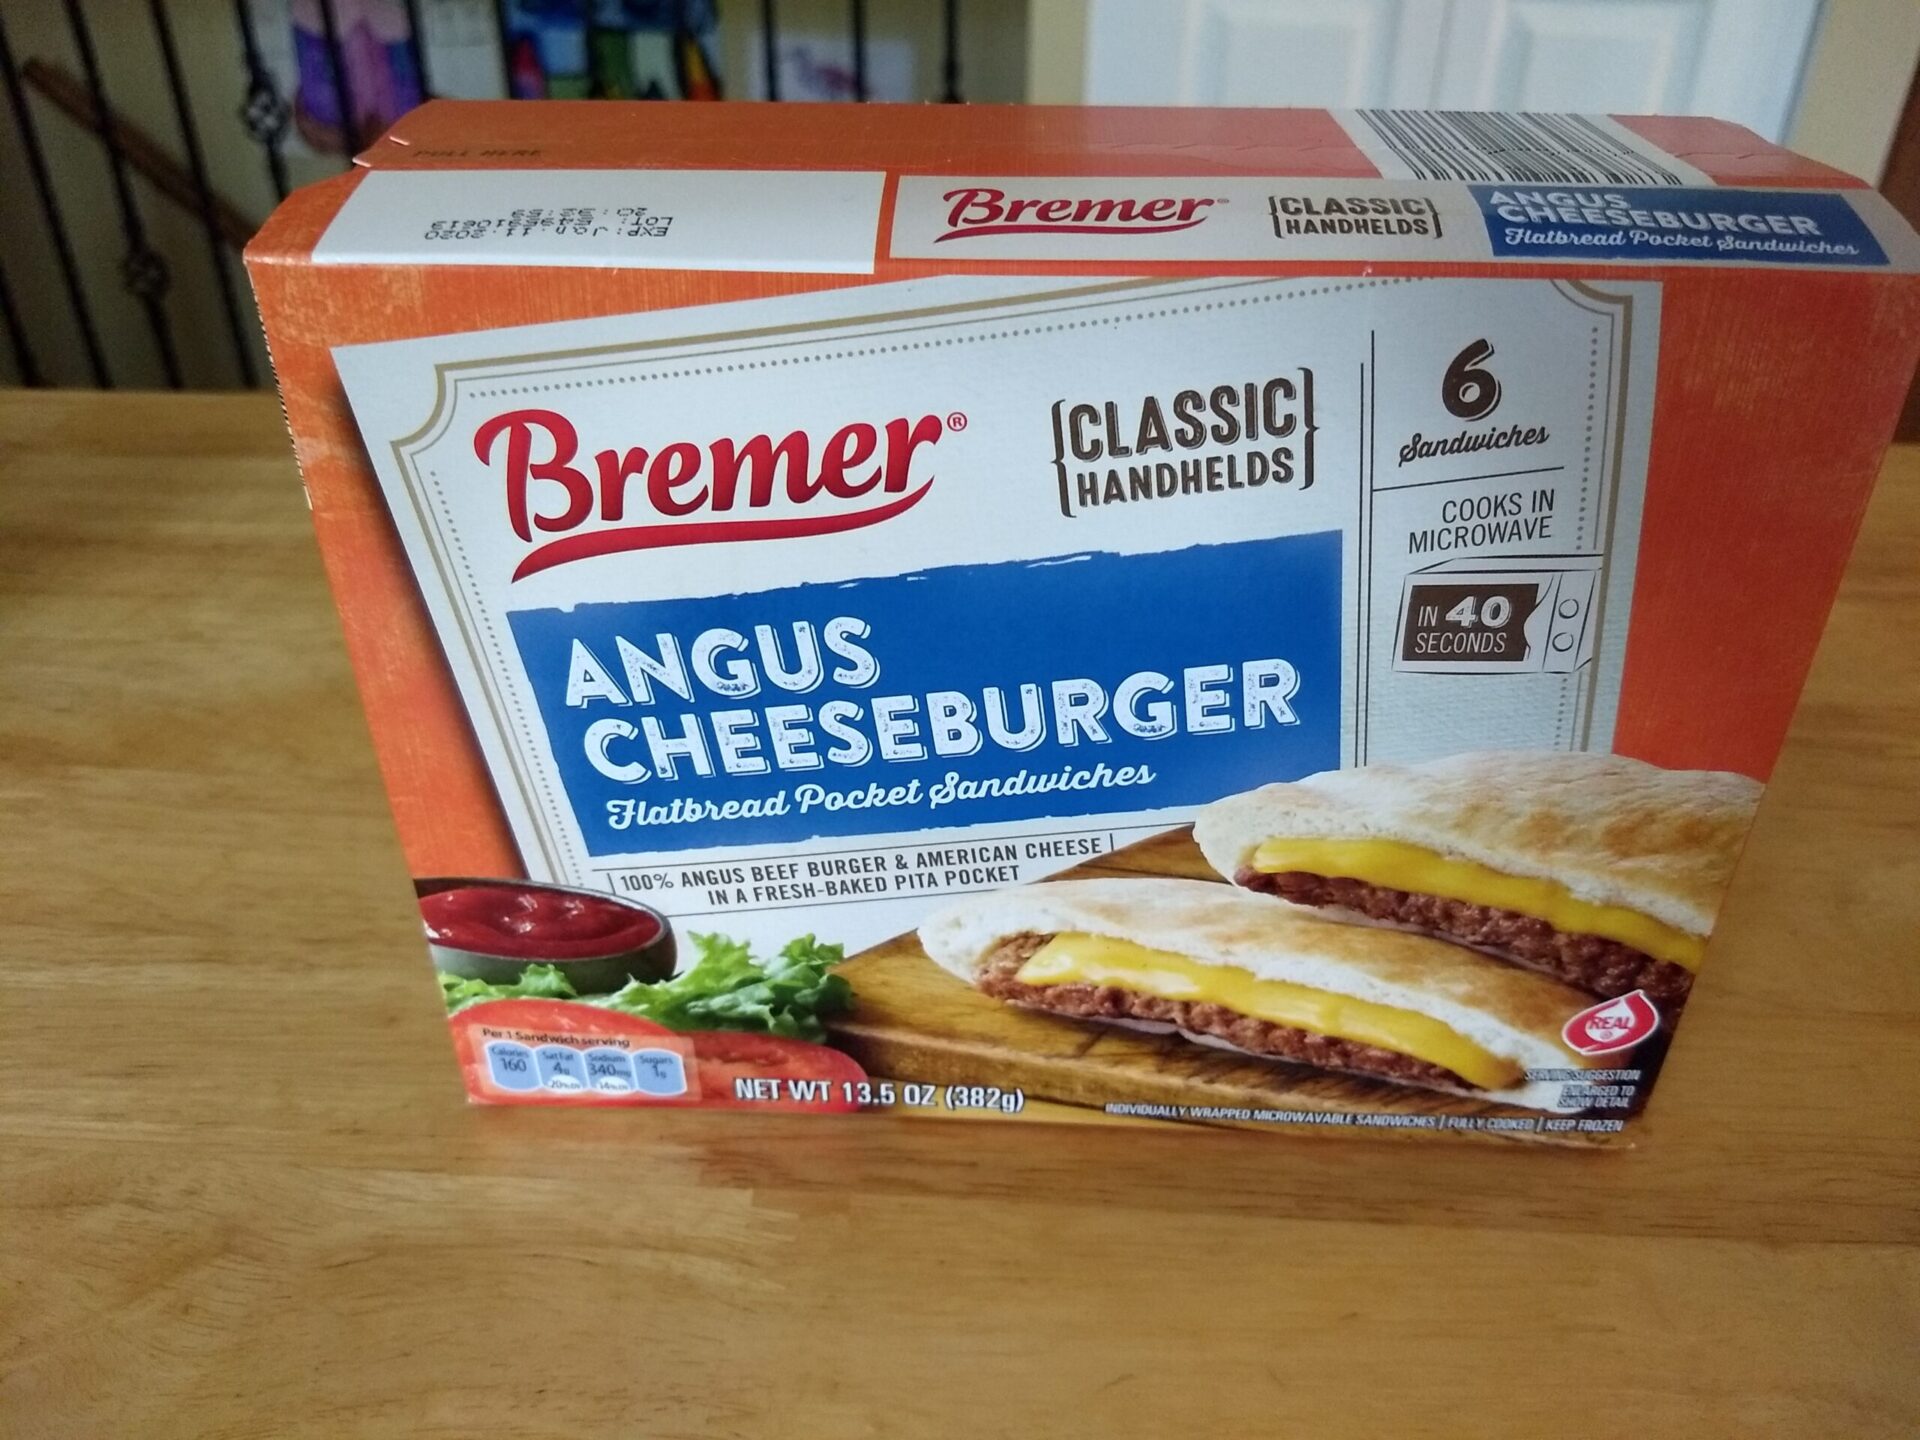 Bremer Classic Handheld Angus Cheeseburger Flatbread Pocket Sandwiches 1